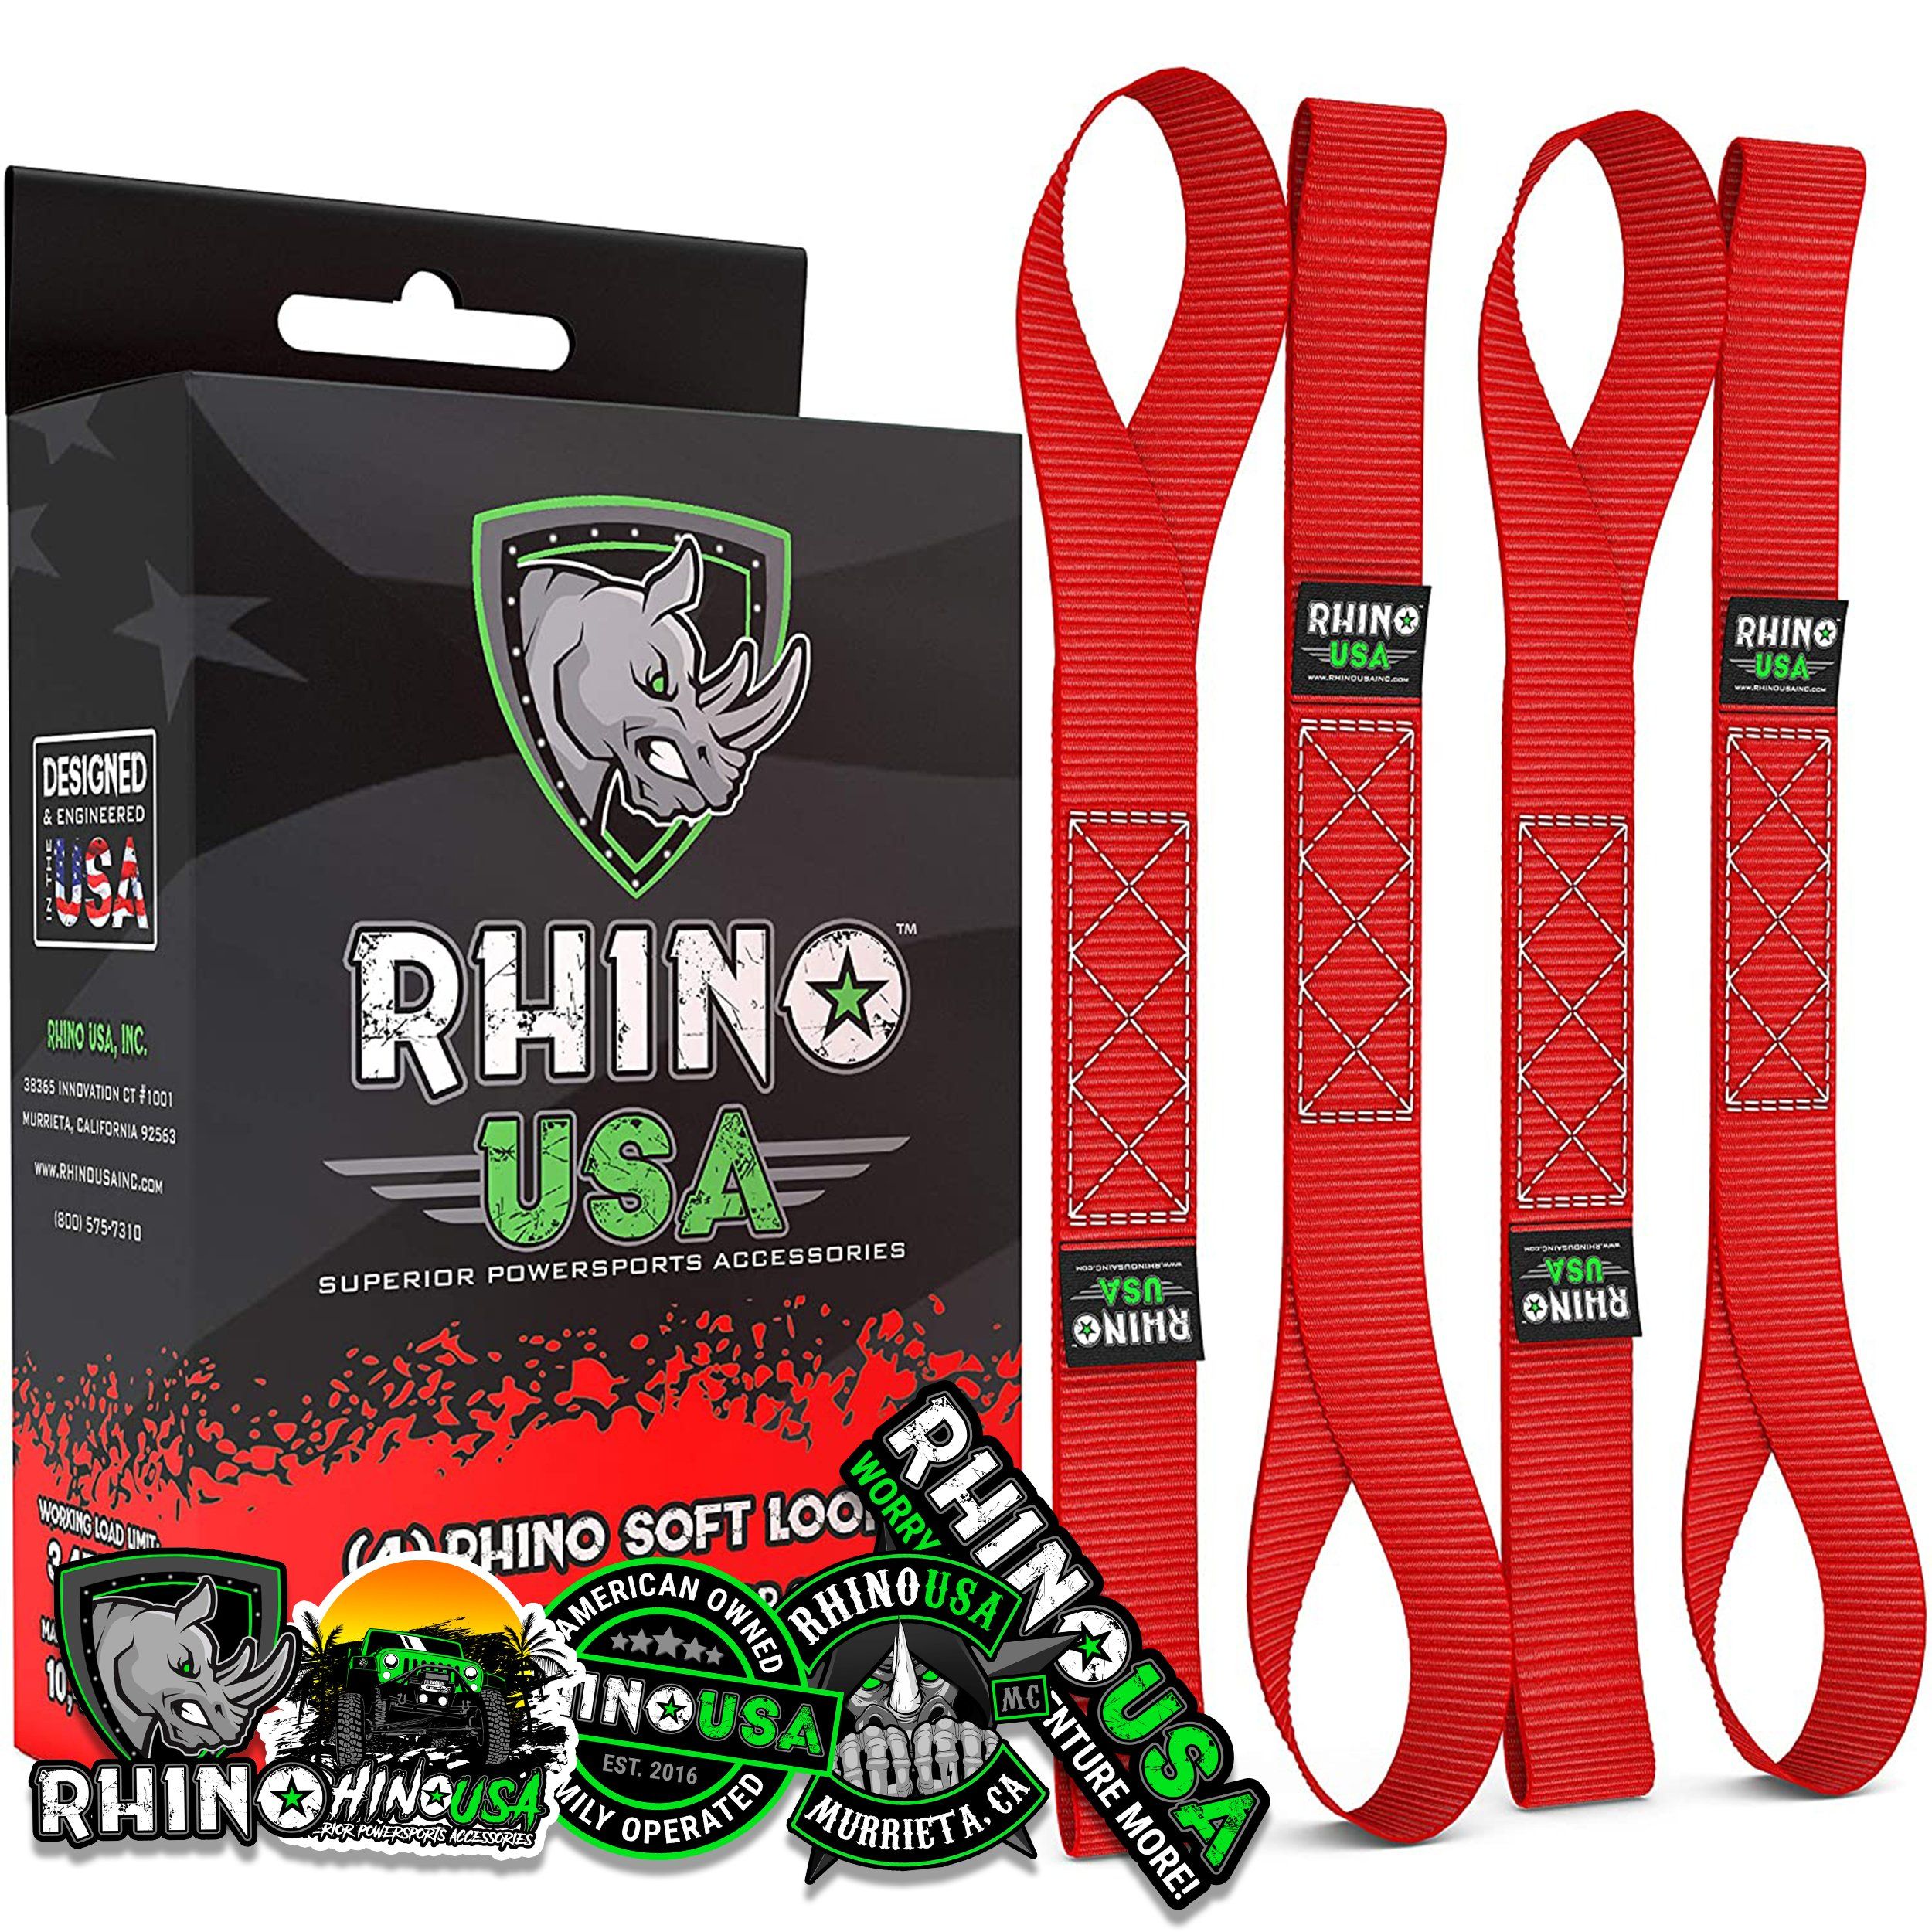 Rhino USA Soft Loop Tie-Down Straps (4-Pack)